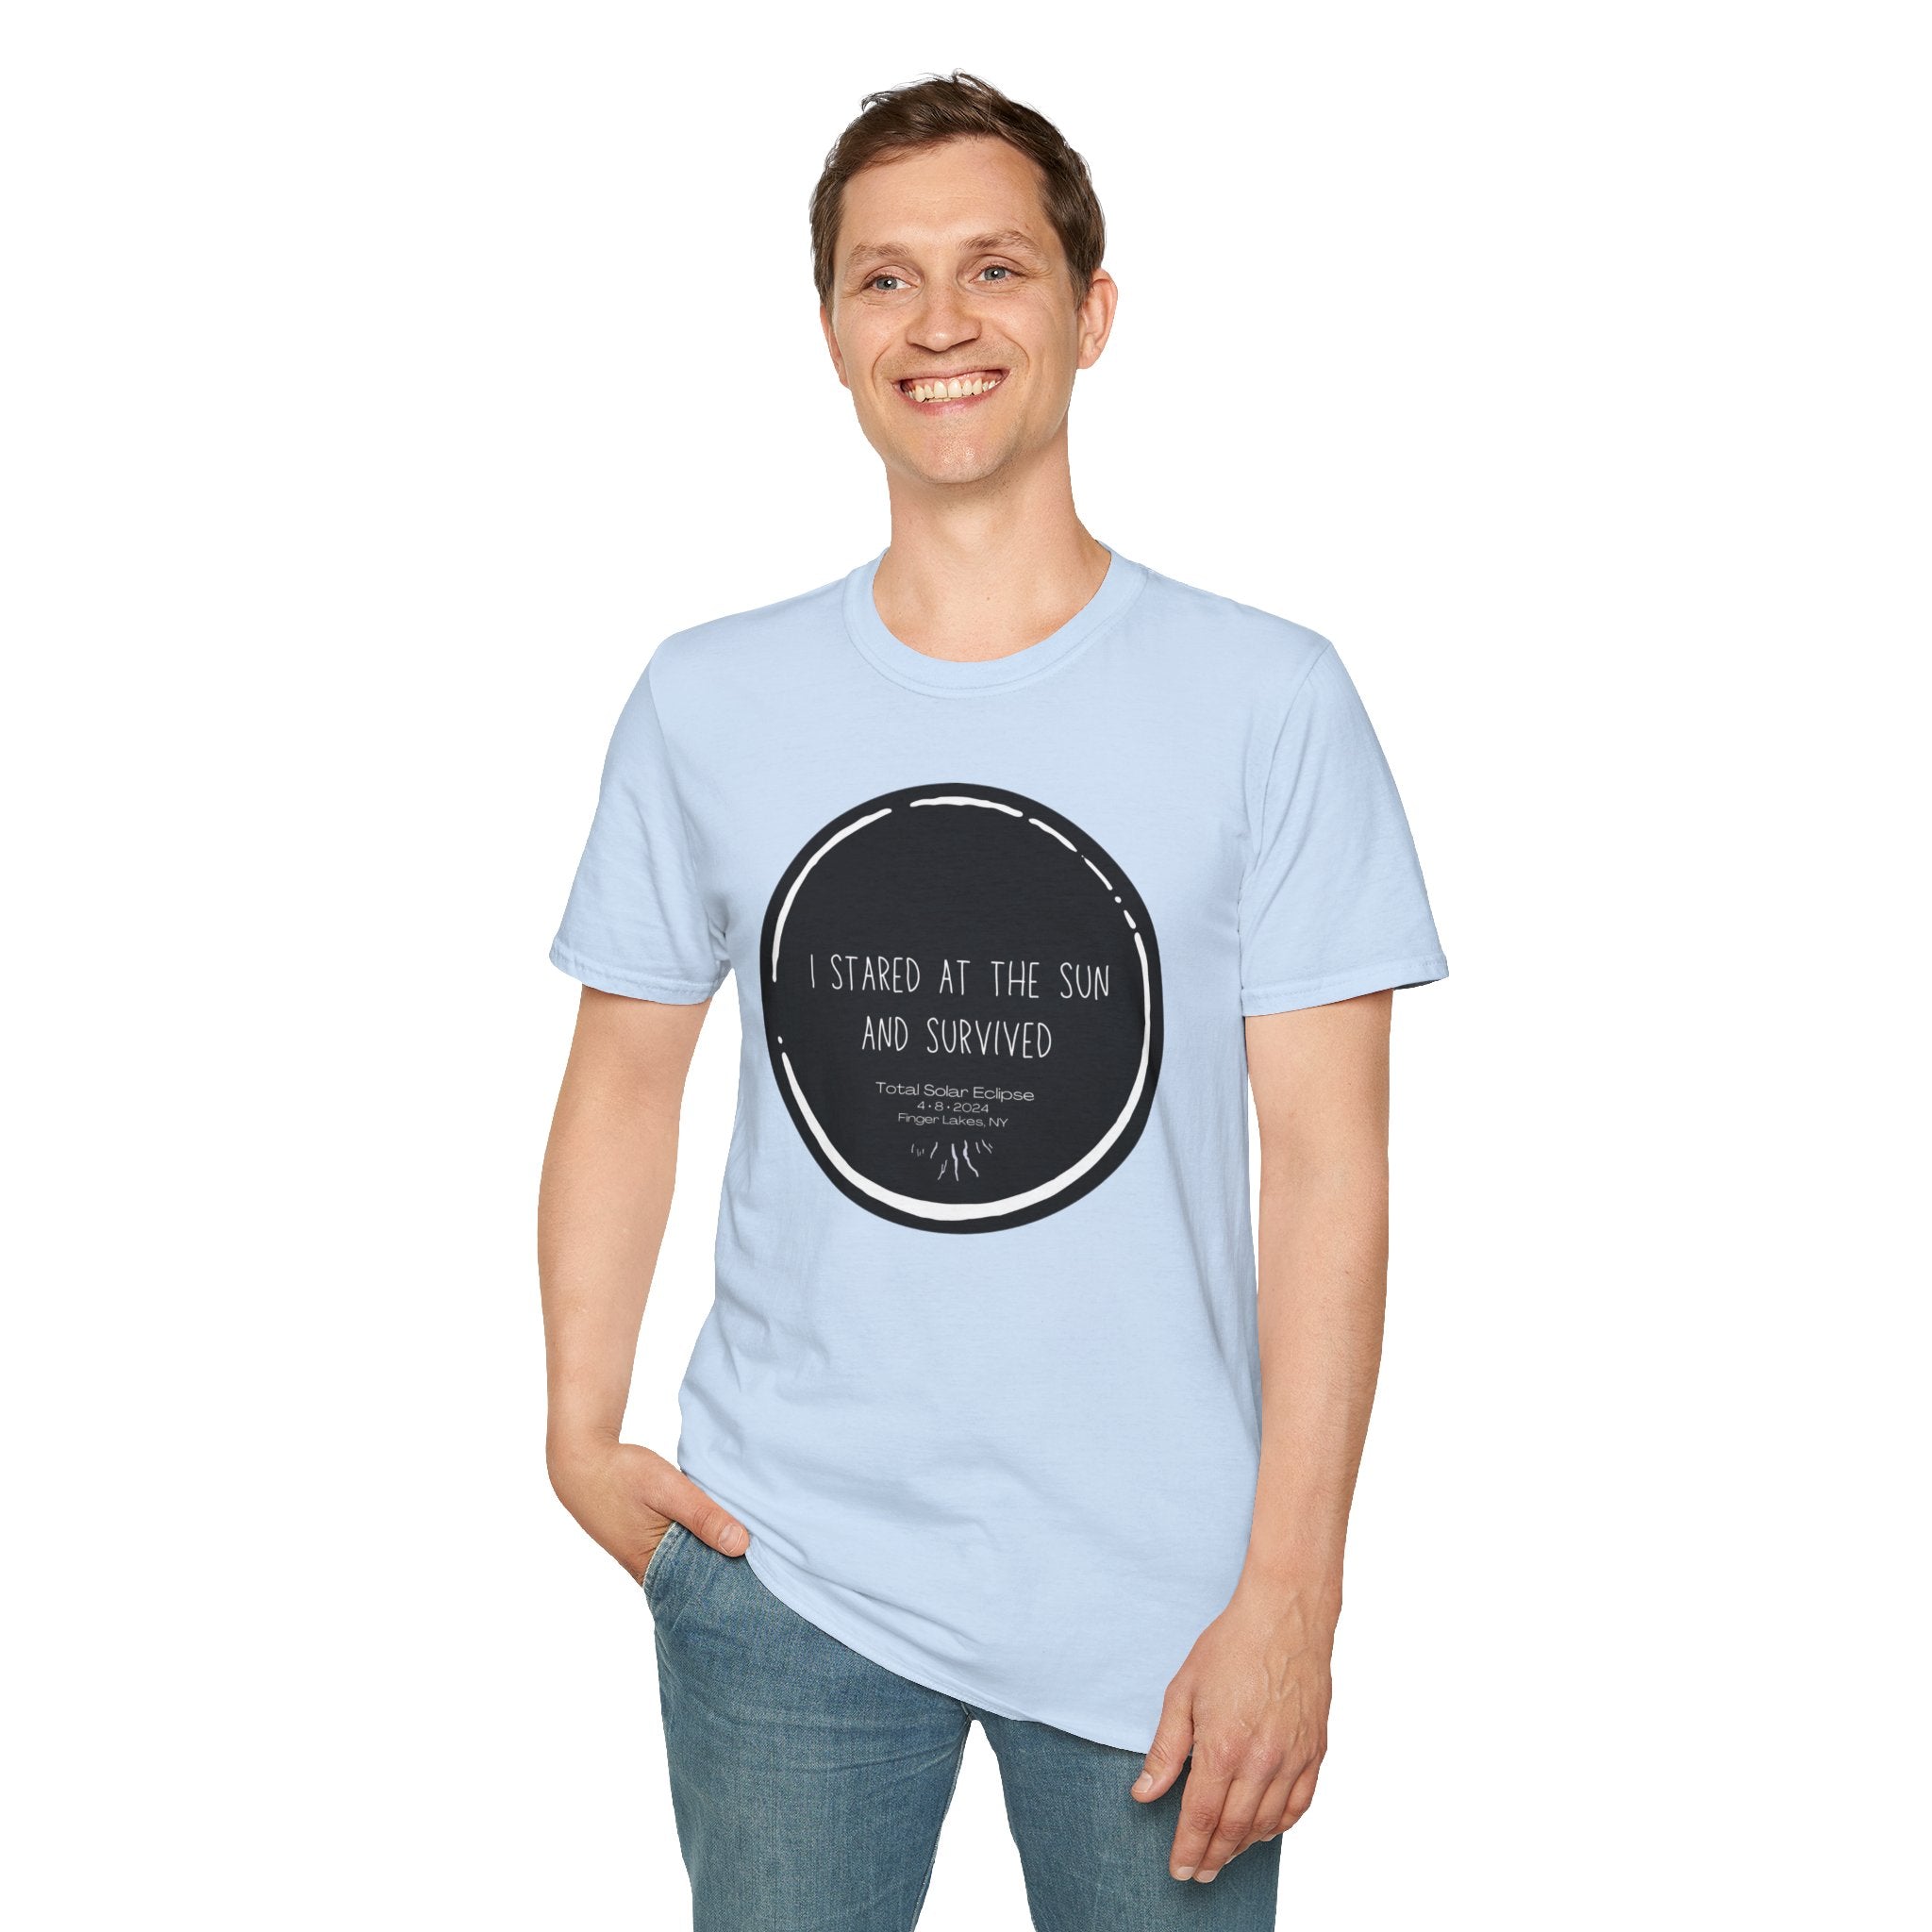 2024 Solar Eclipse T-Shirt